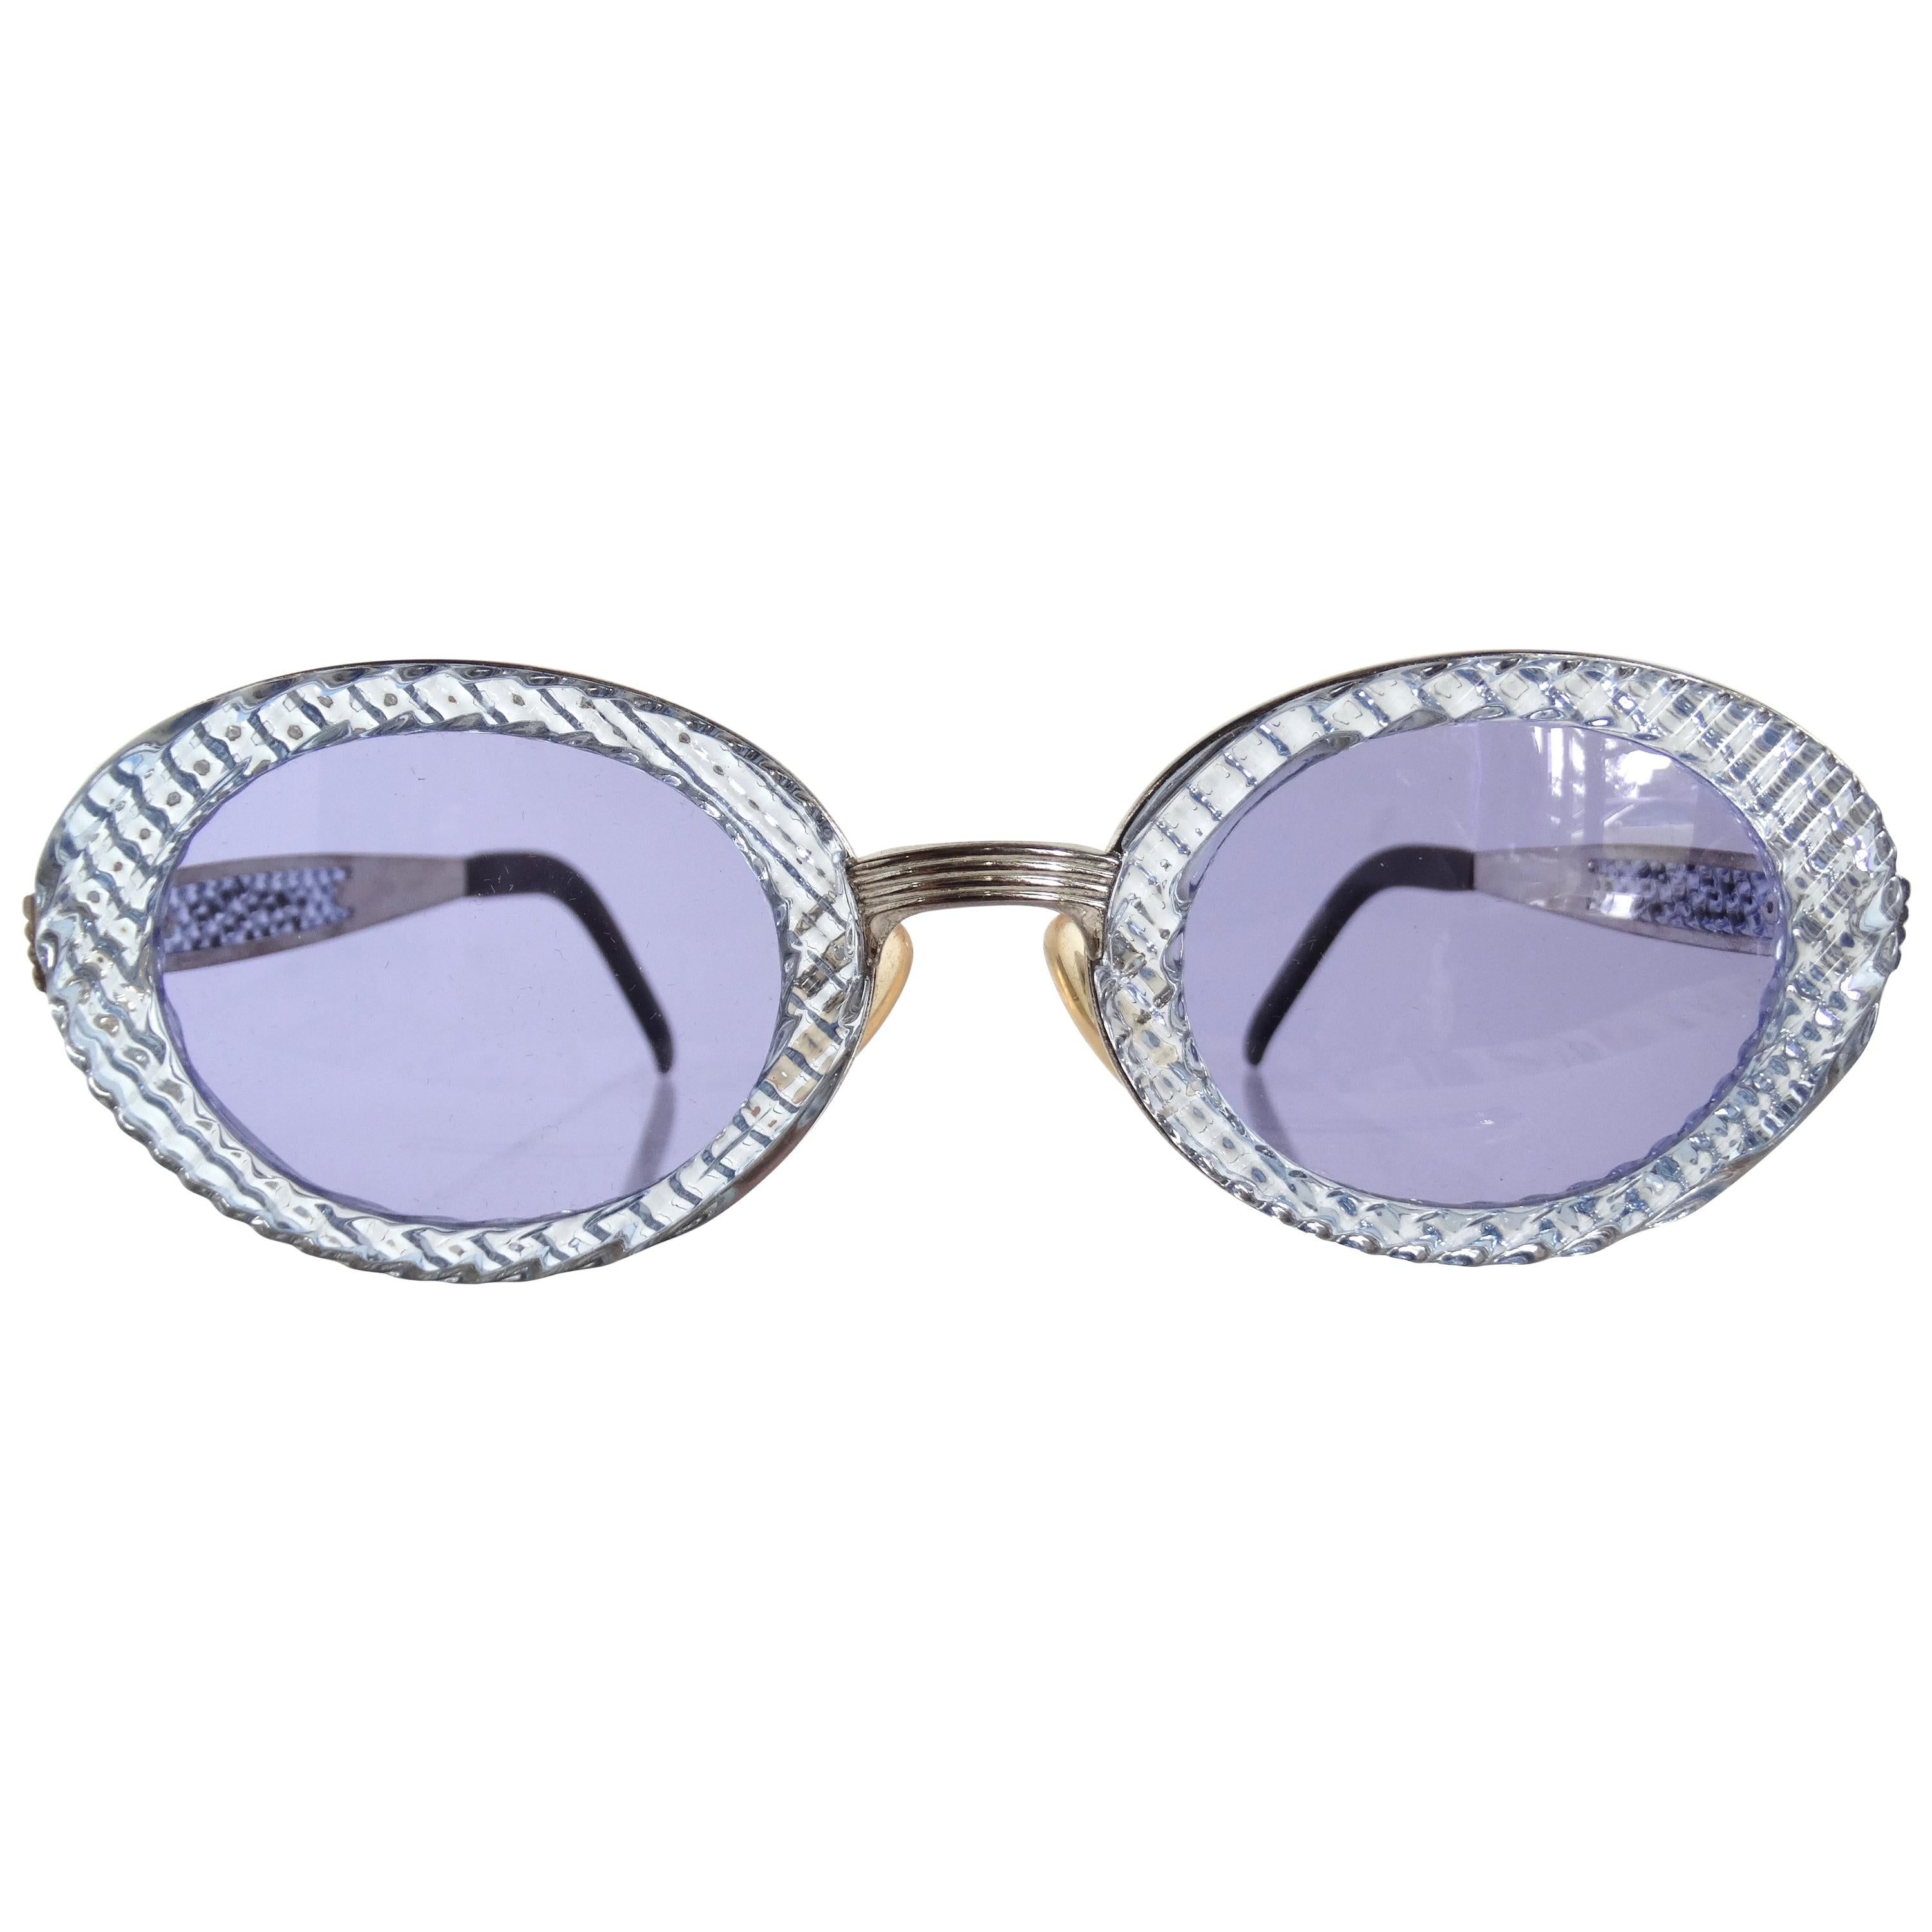 John Paul Gaultier 1990s Textured Blue Oval Fancy Sunglasses 